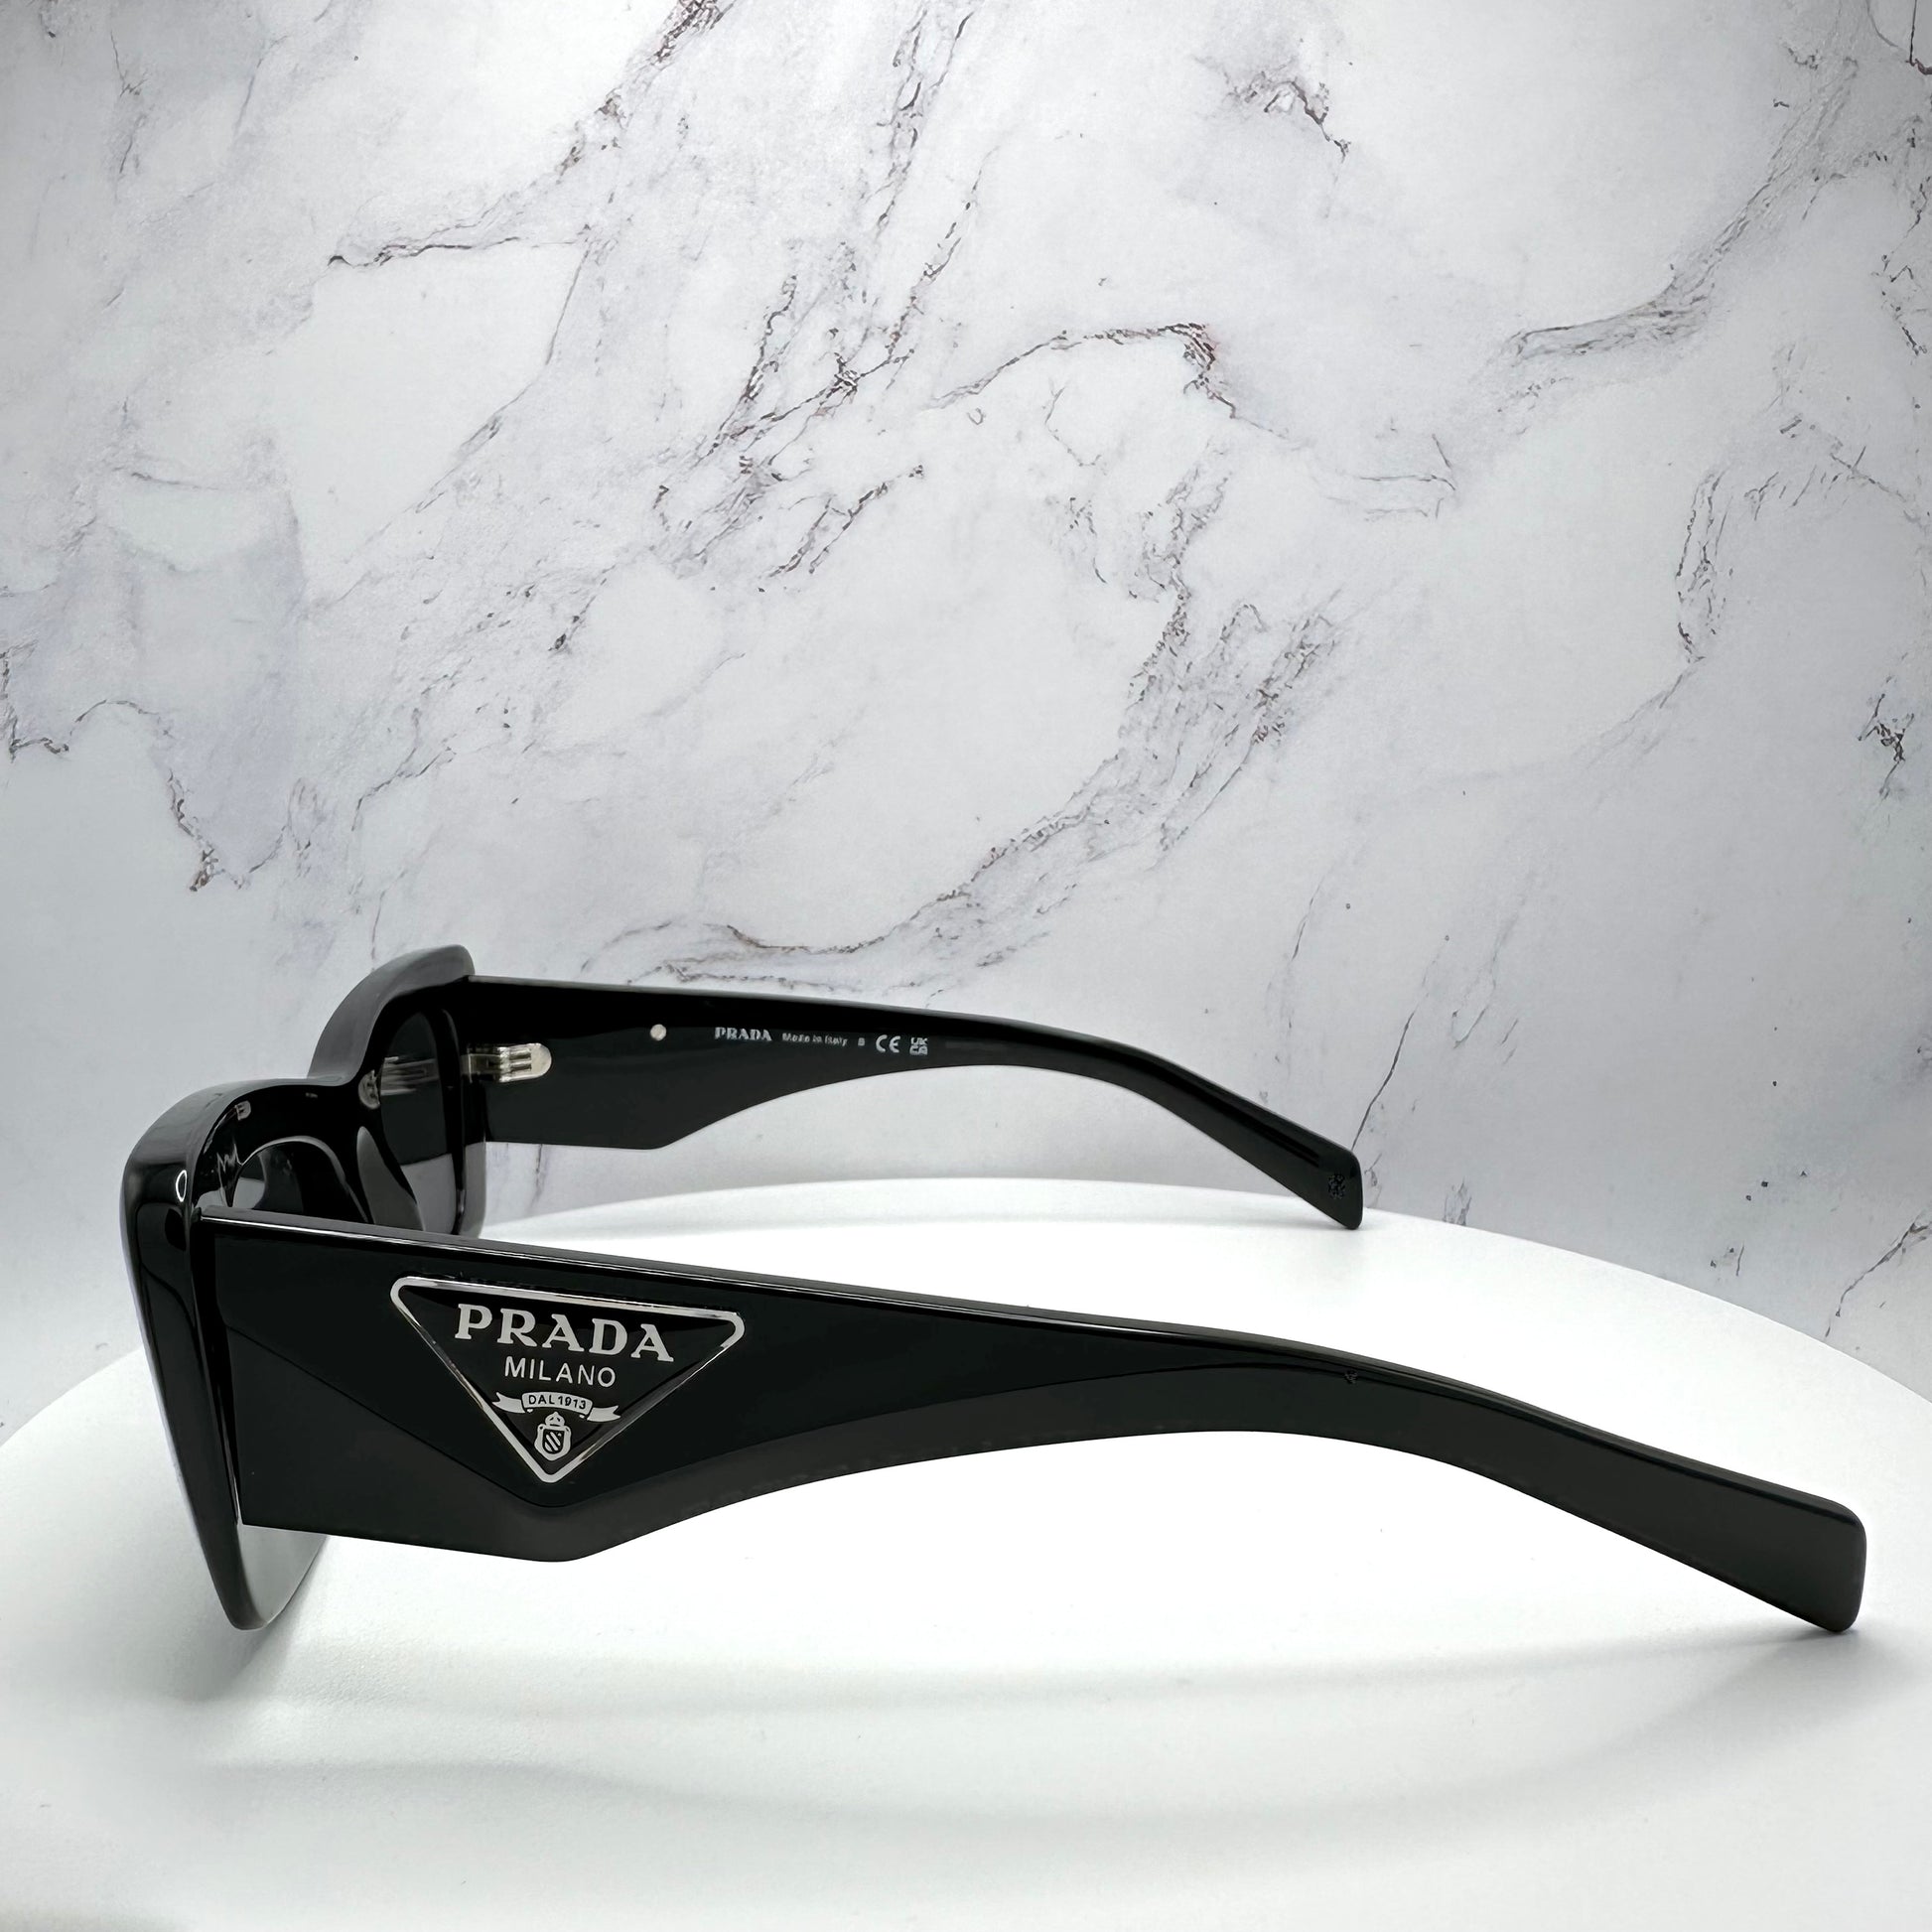 Prada Sunglasses for Women & Men